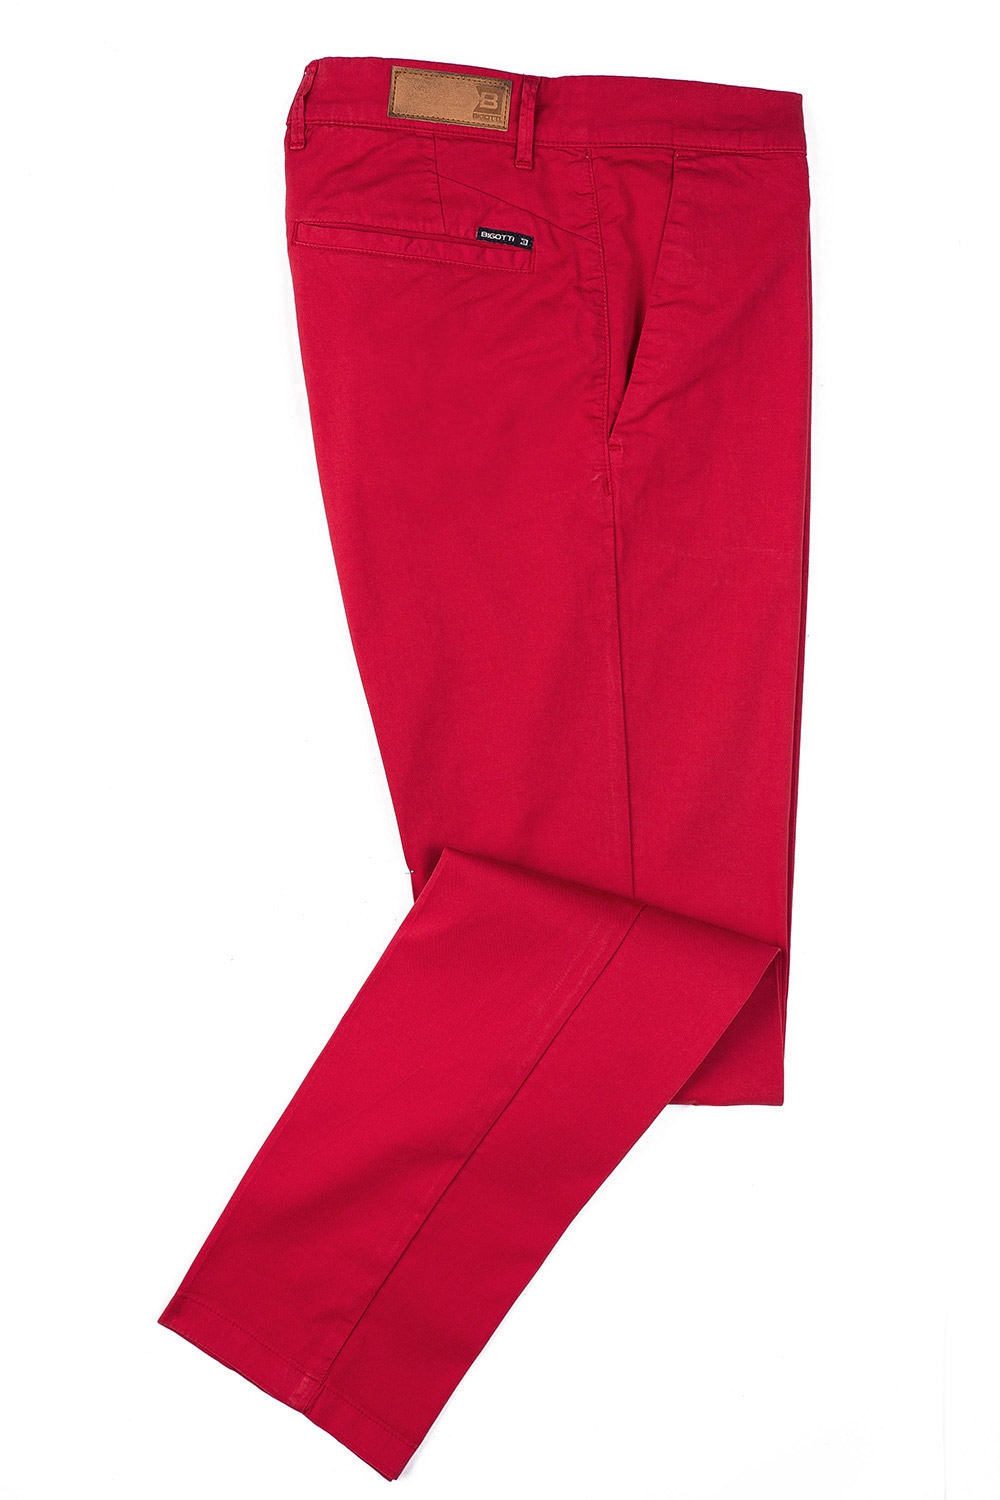 Pantaloni superslim trento rosii uni 1